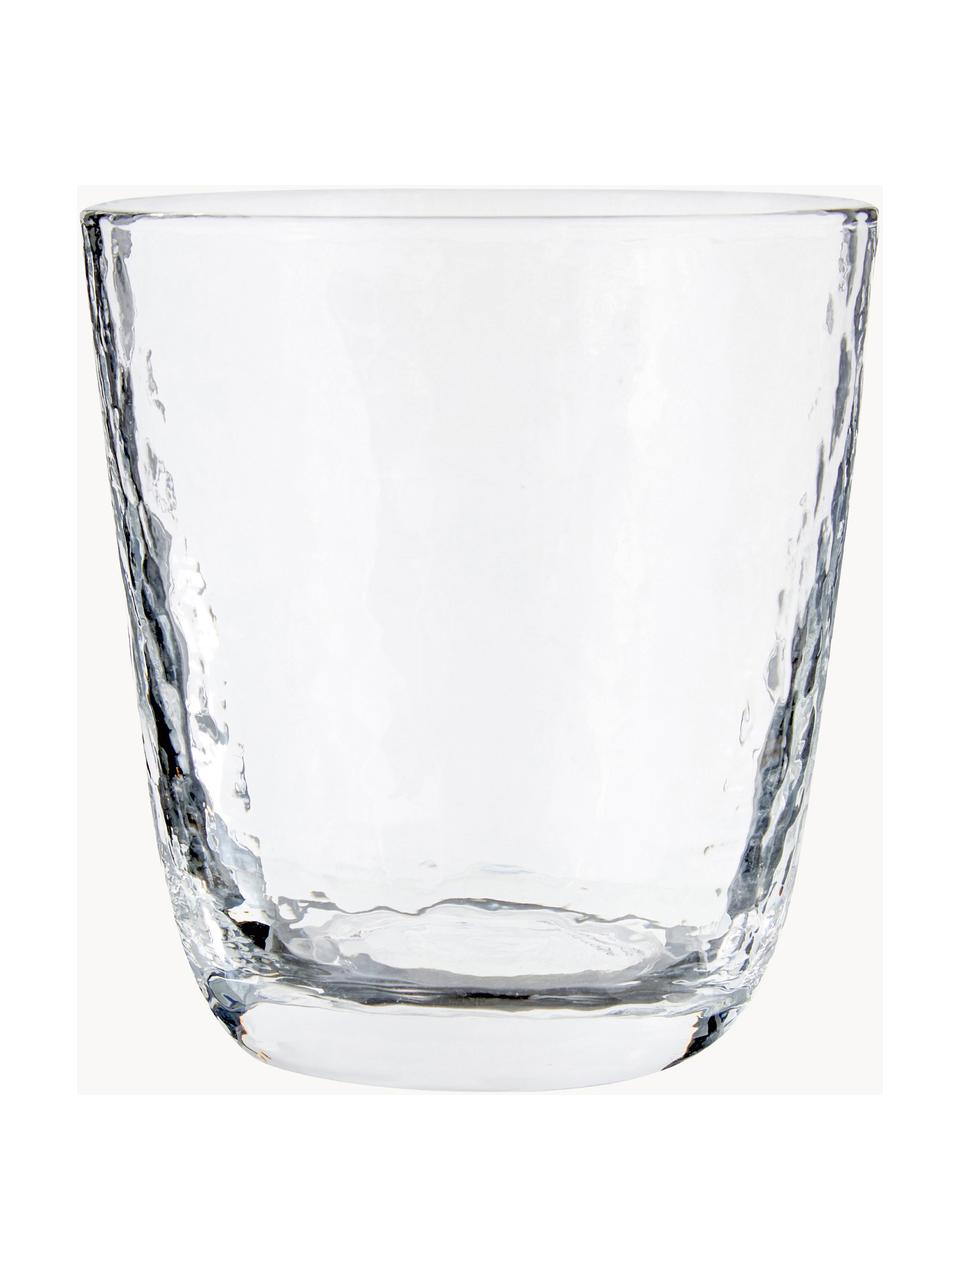 Bicchiere acqua in vetro soffiato irregolare Hammered 4 pz, Vetro soffiato, Trasparente, Ø 9 x Alt. 10 cm, 250 ml